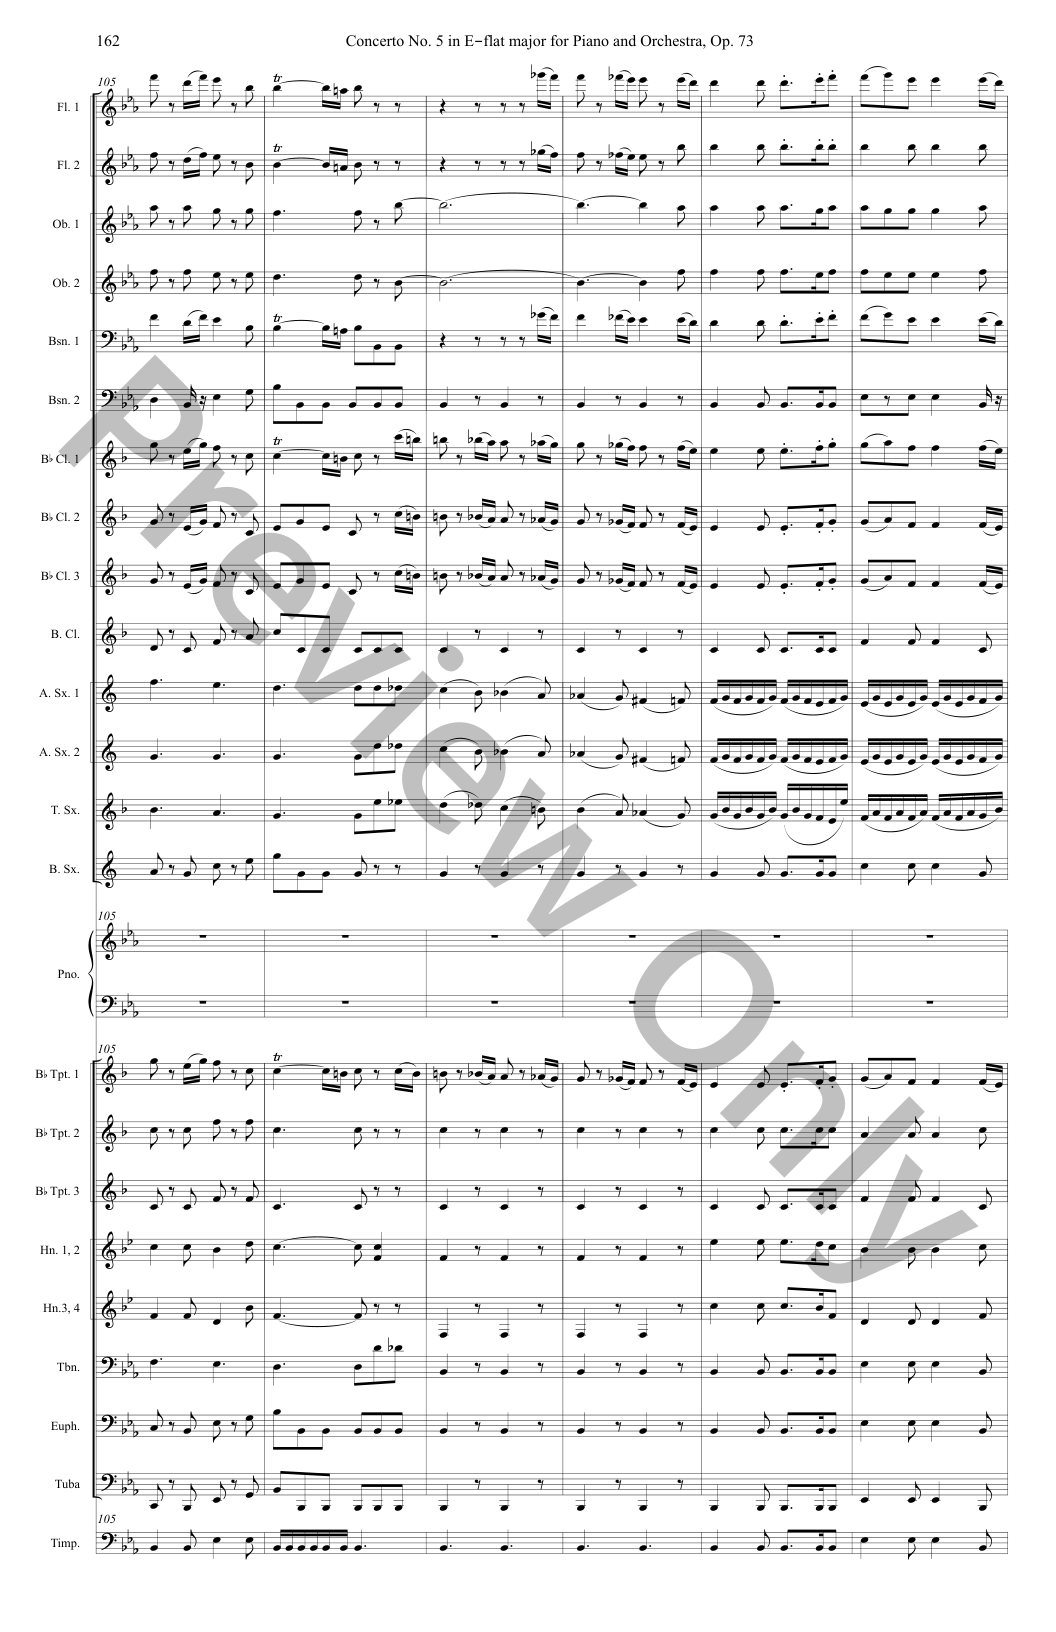 Piano Concerto No. 5 in E-flat major - Op. 73 